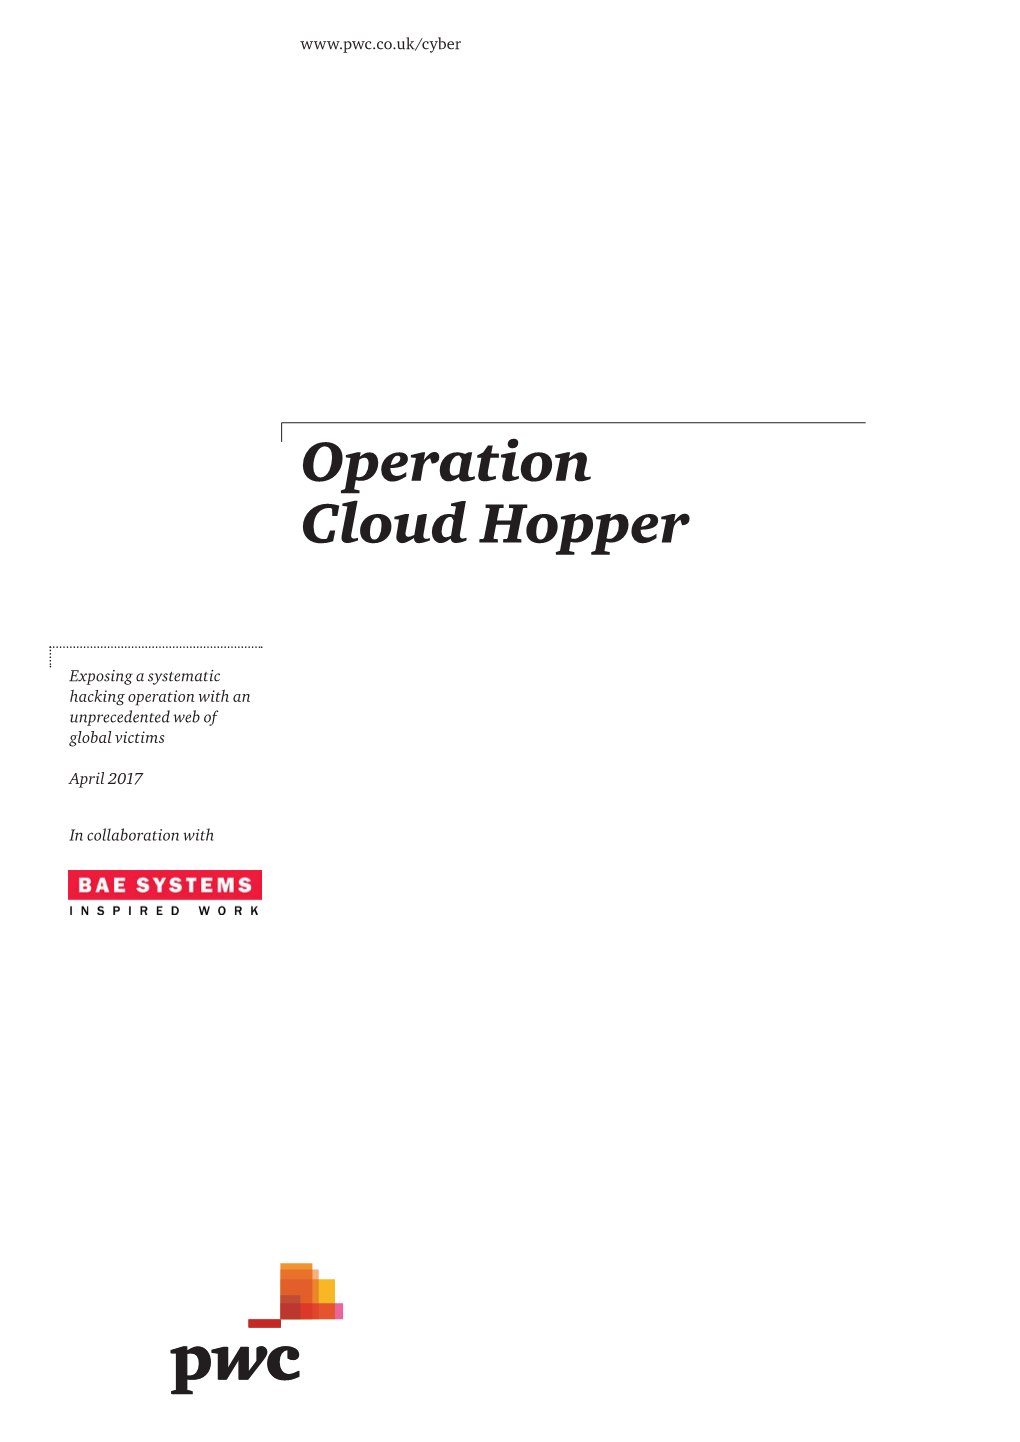 Operation Cloud Hopper